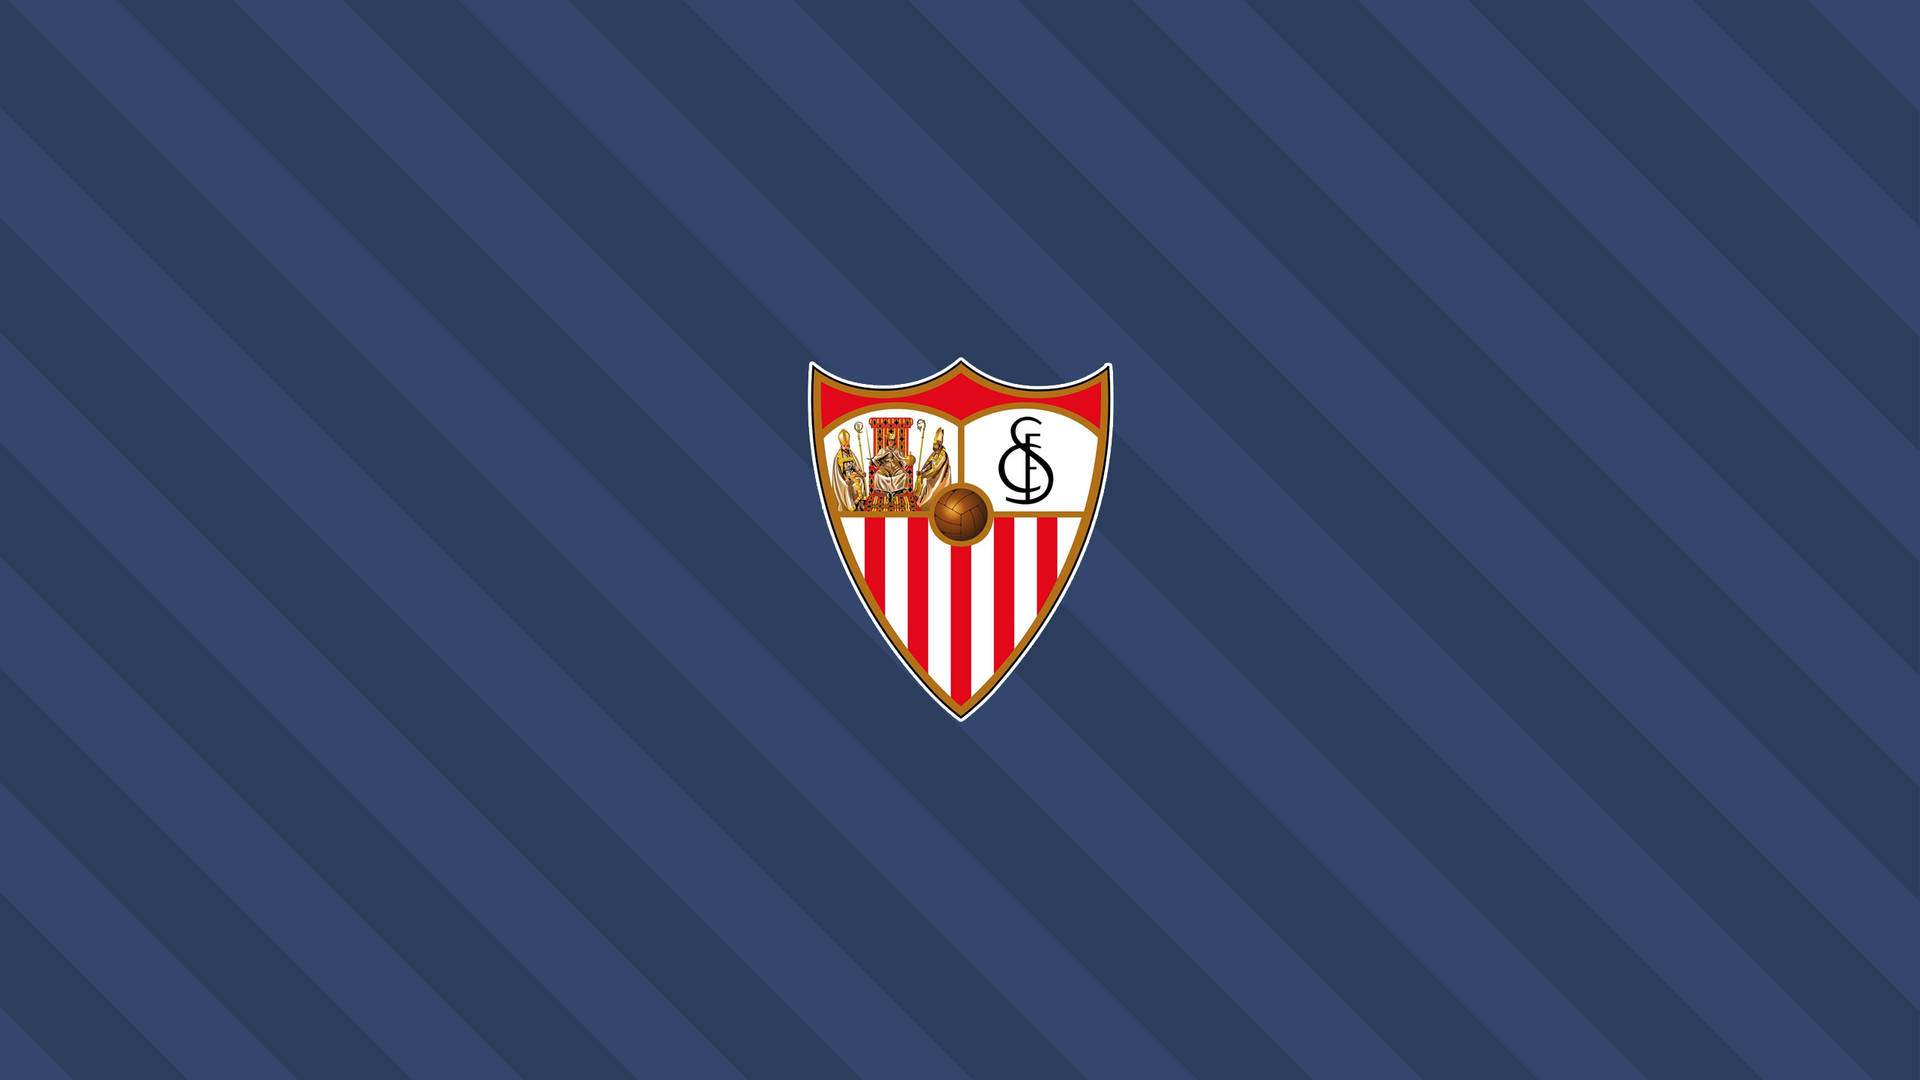 Sevilla Fc In Blue Background